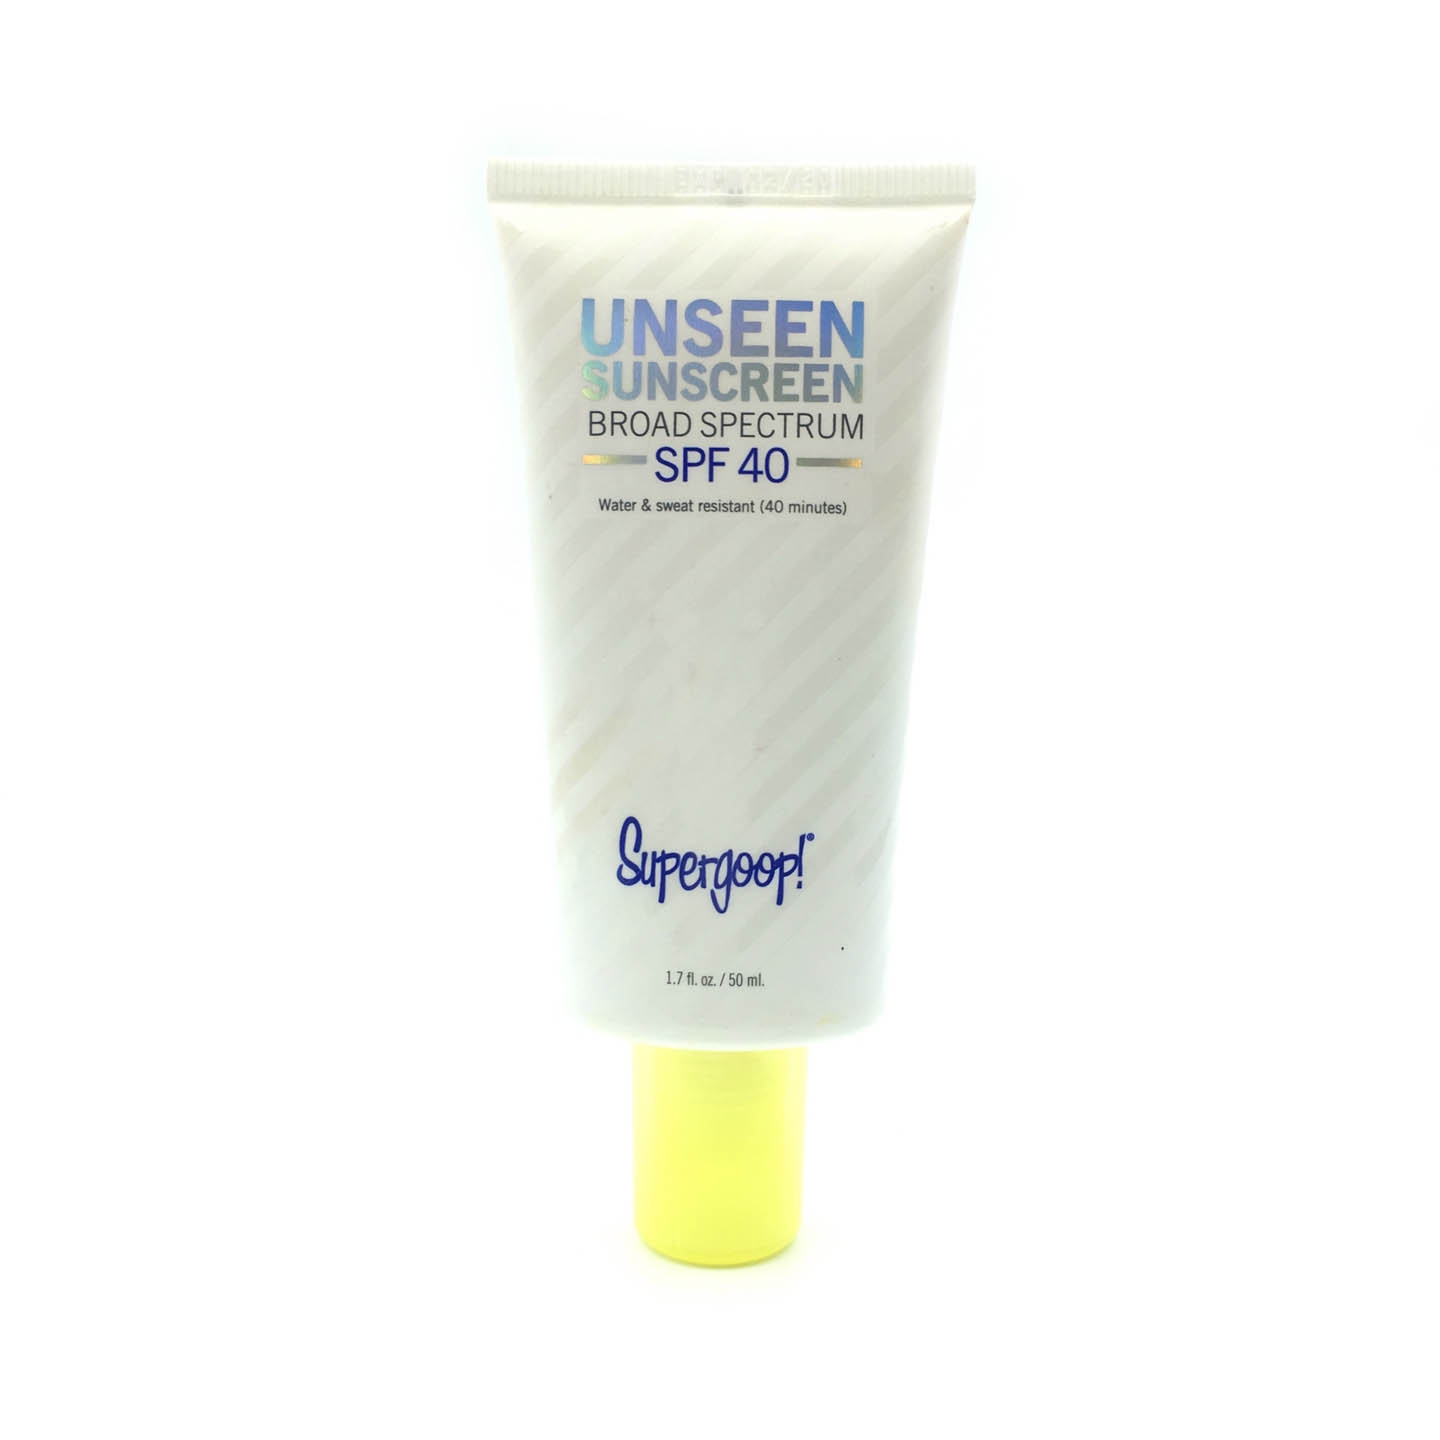 Supergoop Unseen Sunscreen Broad Spectrum Spf 40 Skin Care